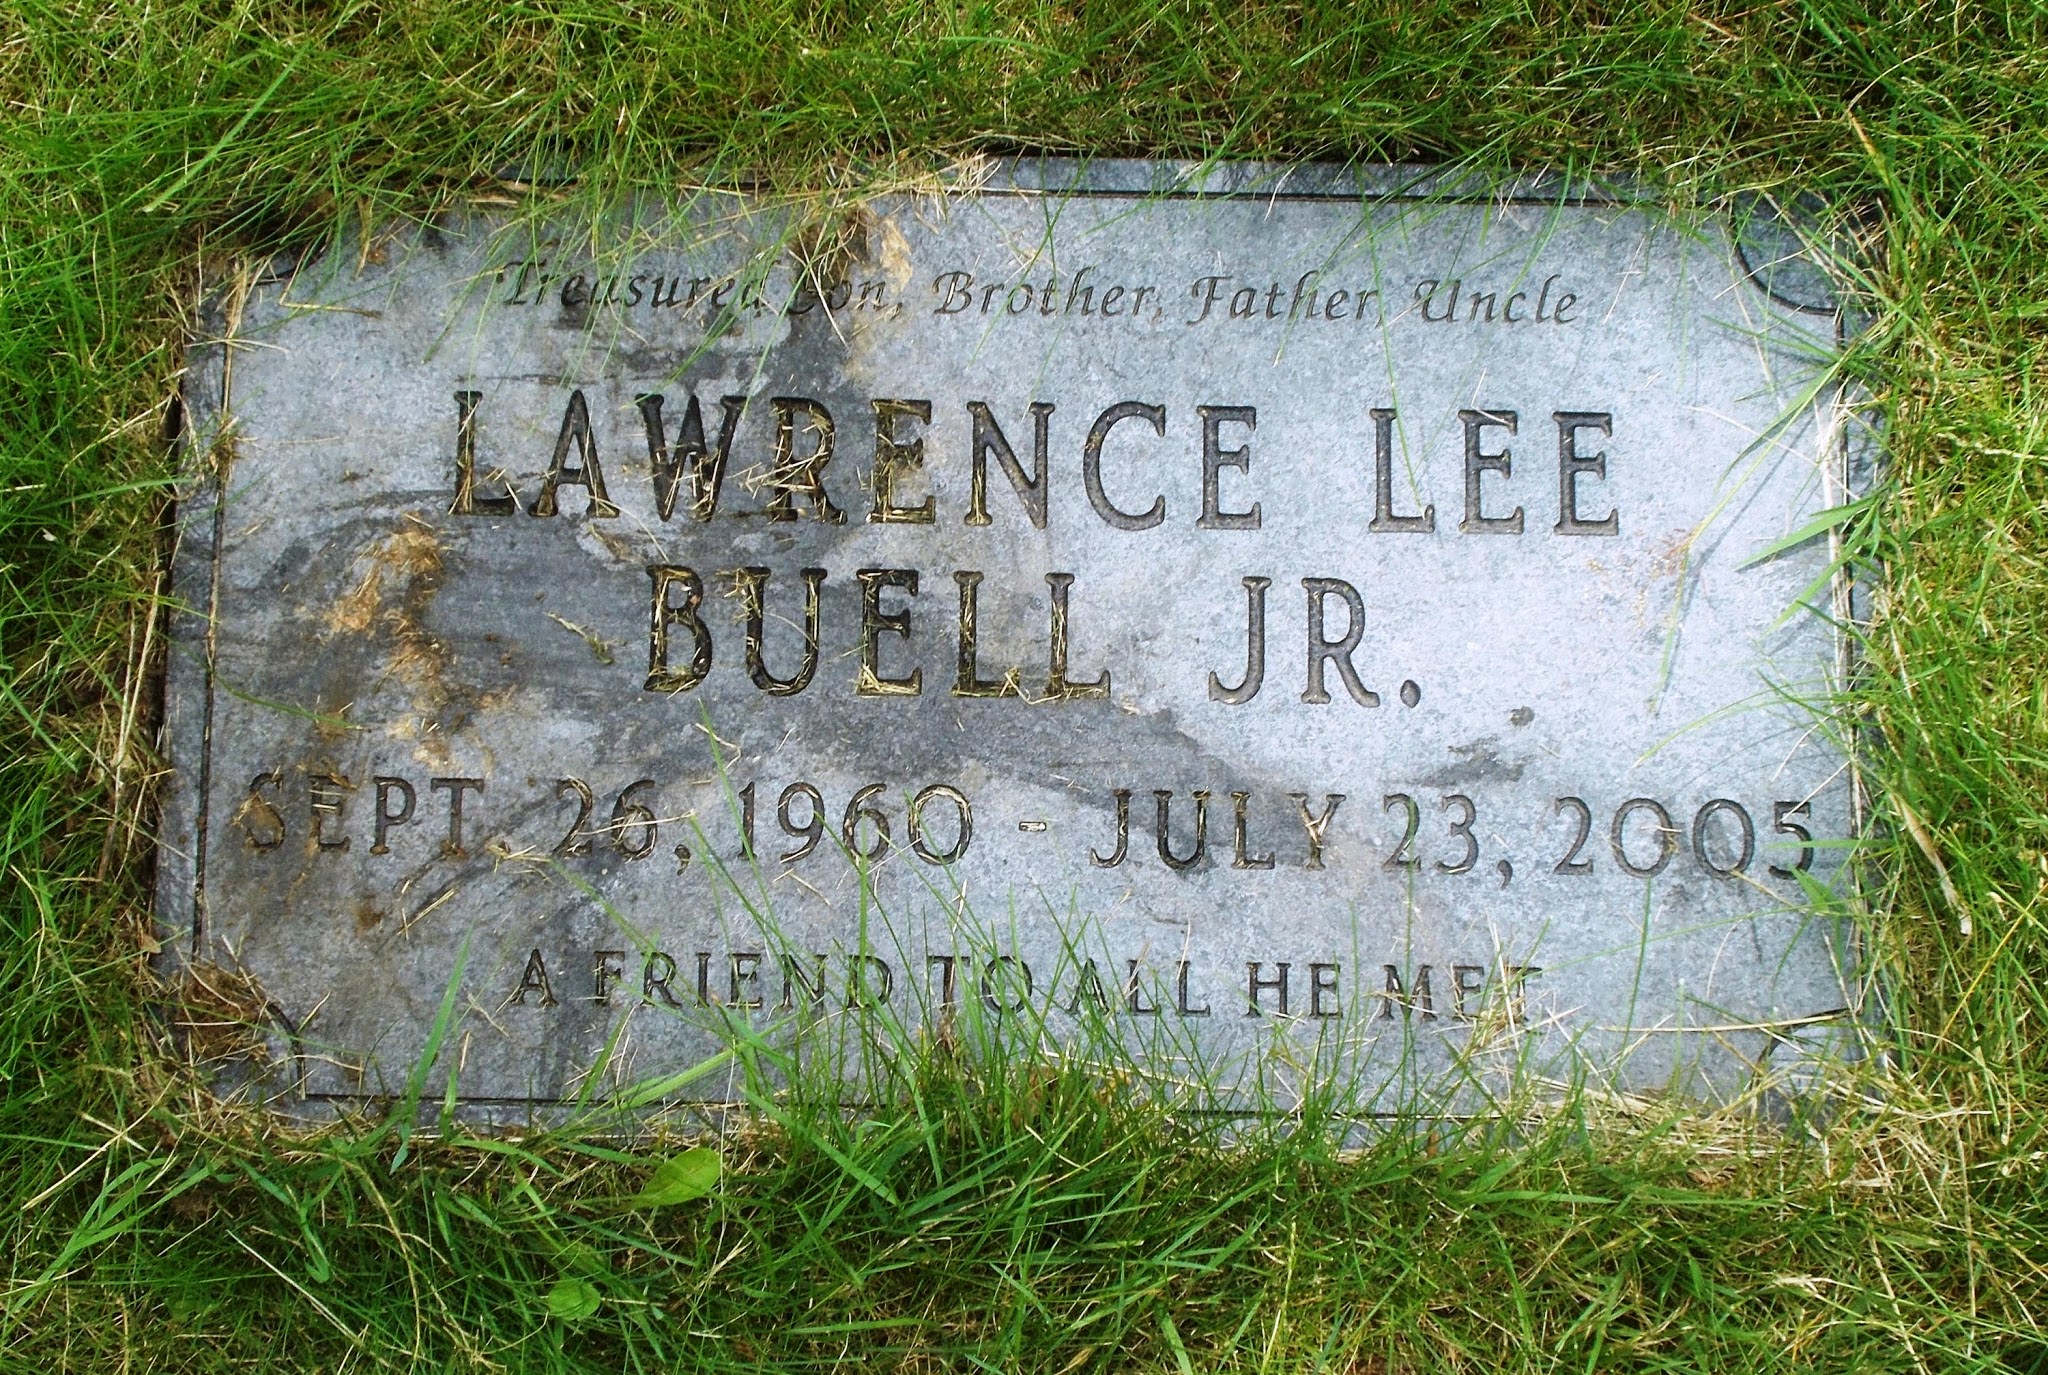 Lawrence Lee Buell, Jr